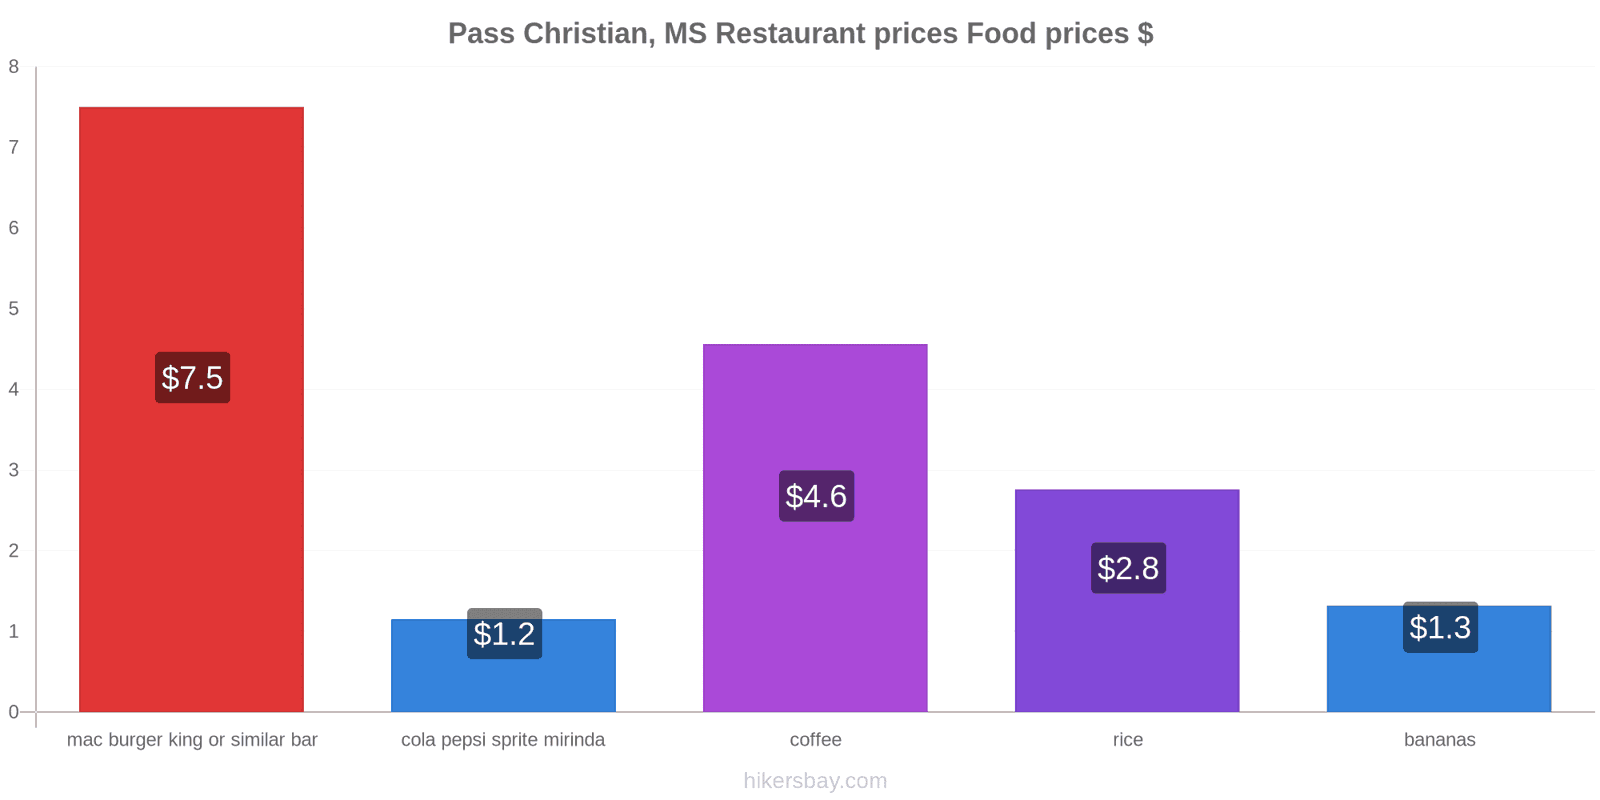 Pass Christian, MS price changes hikersbay.com